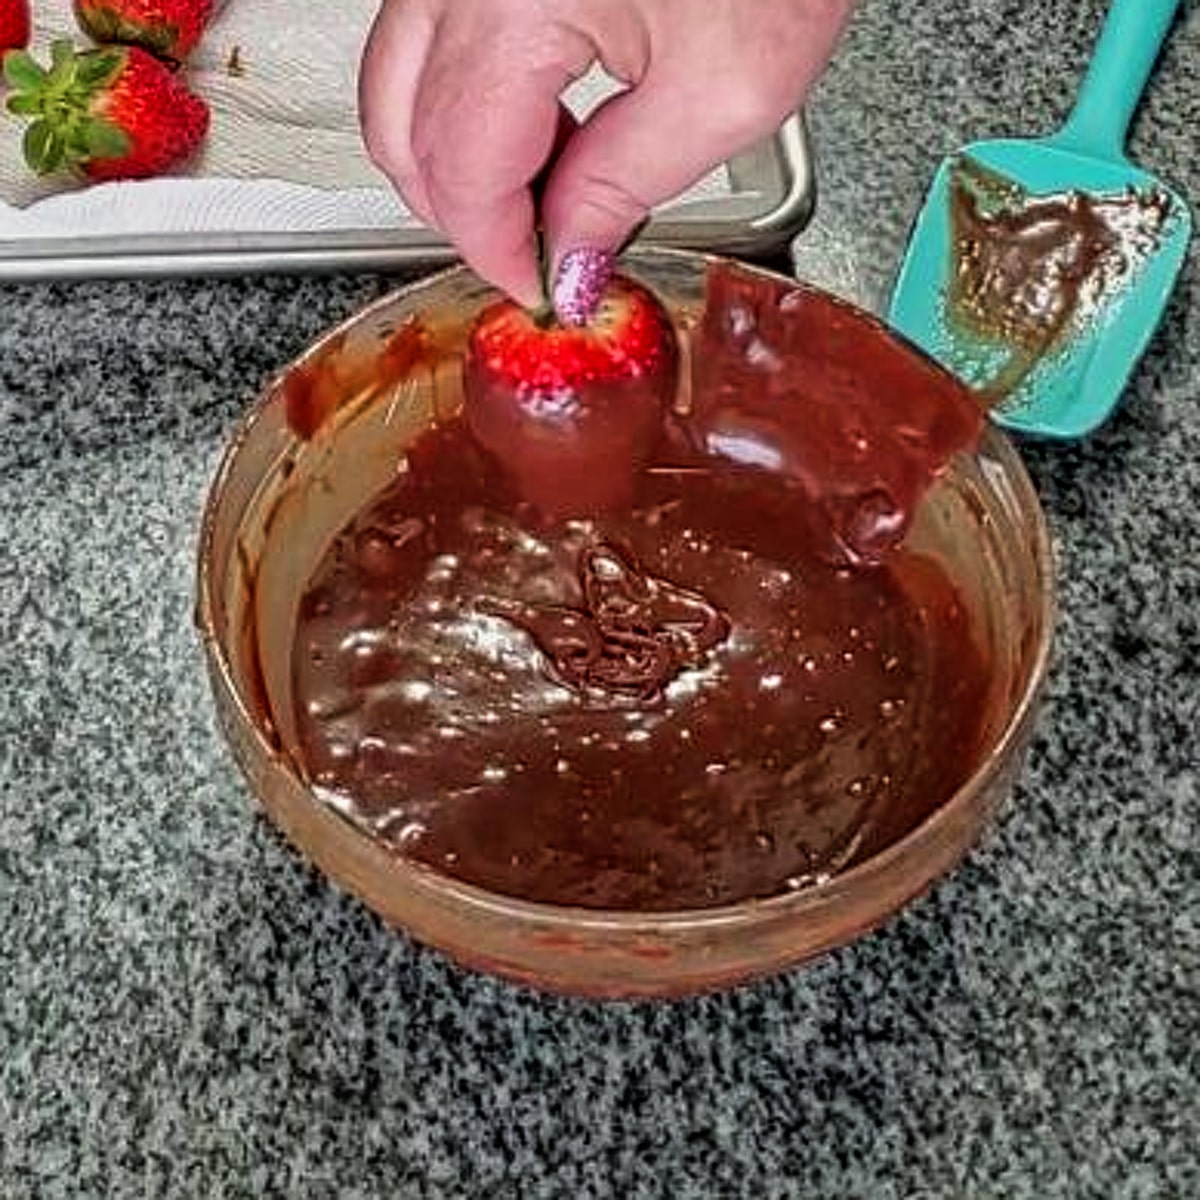 dipping strawberry in chocolate ganache.